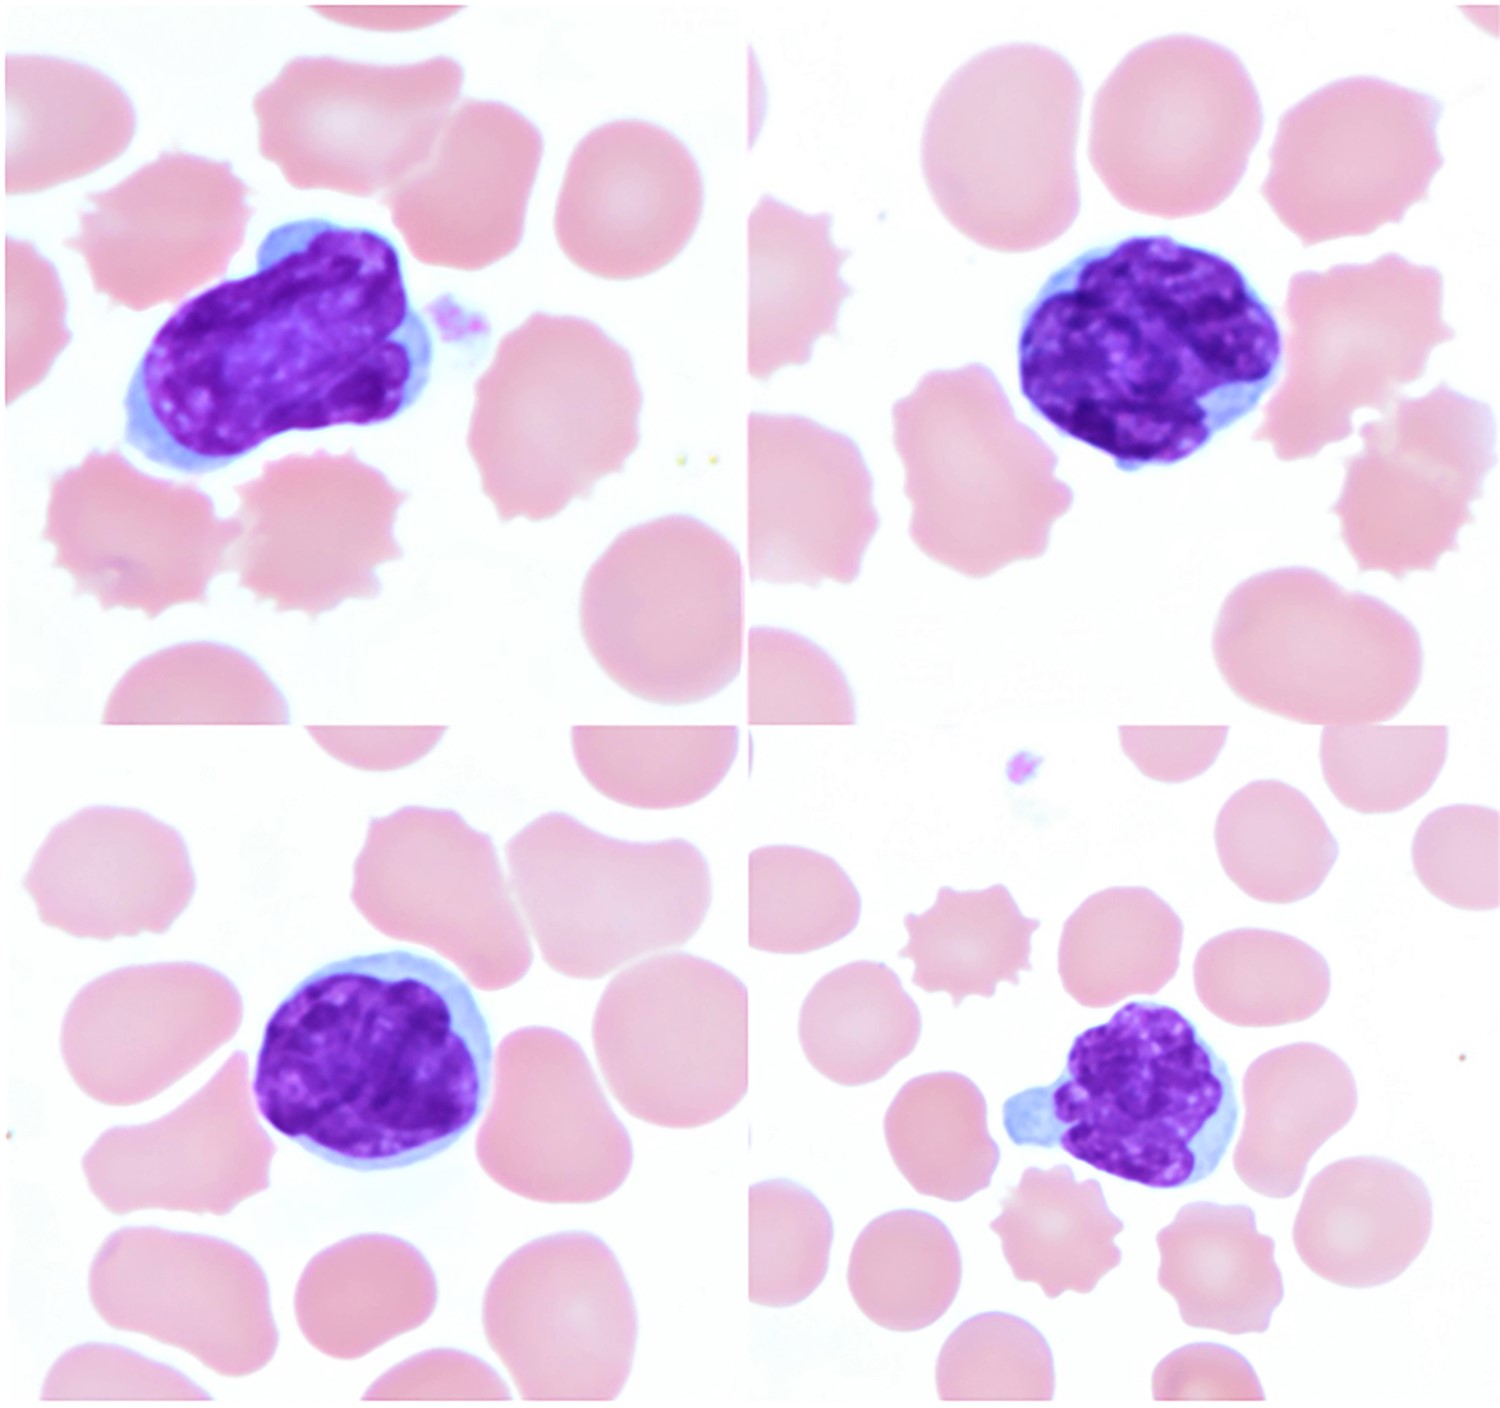 Cerebriform lymphocytes in peripheral blood smear